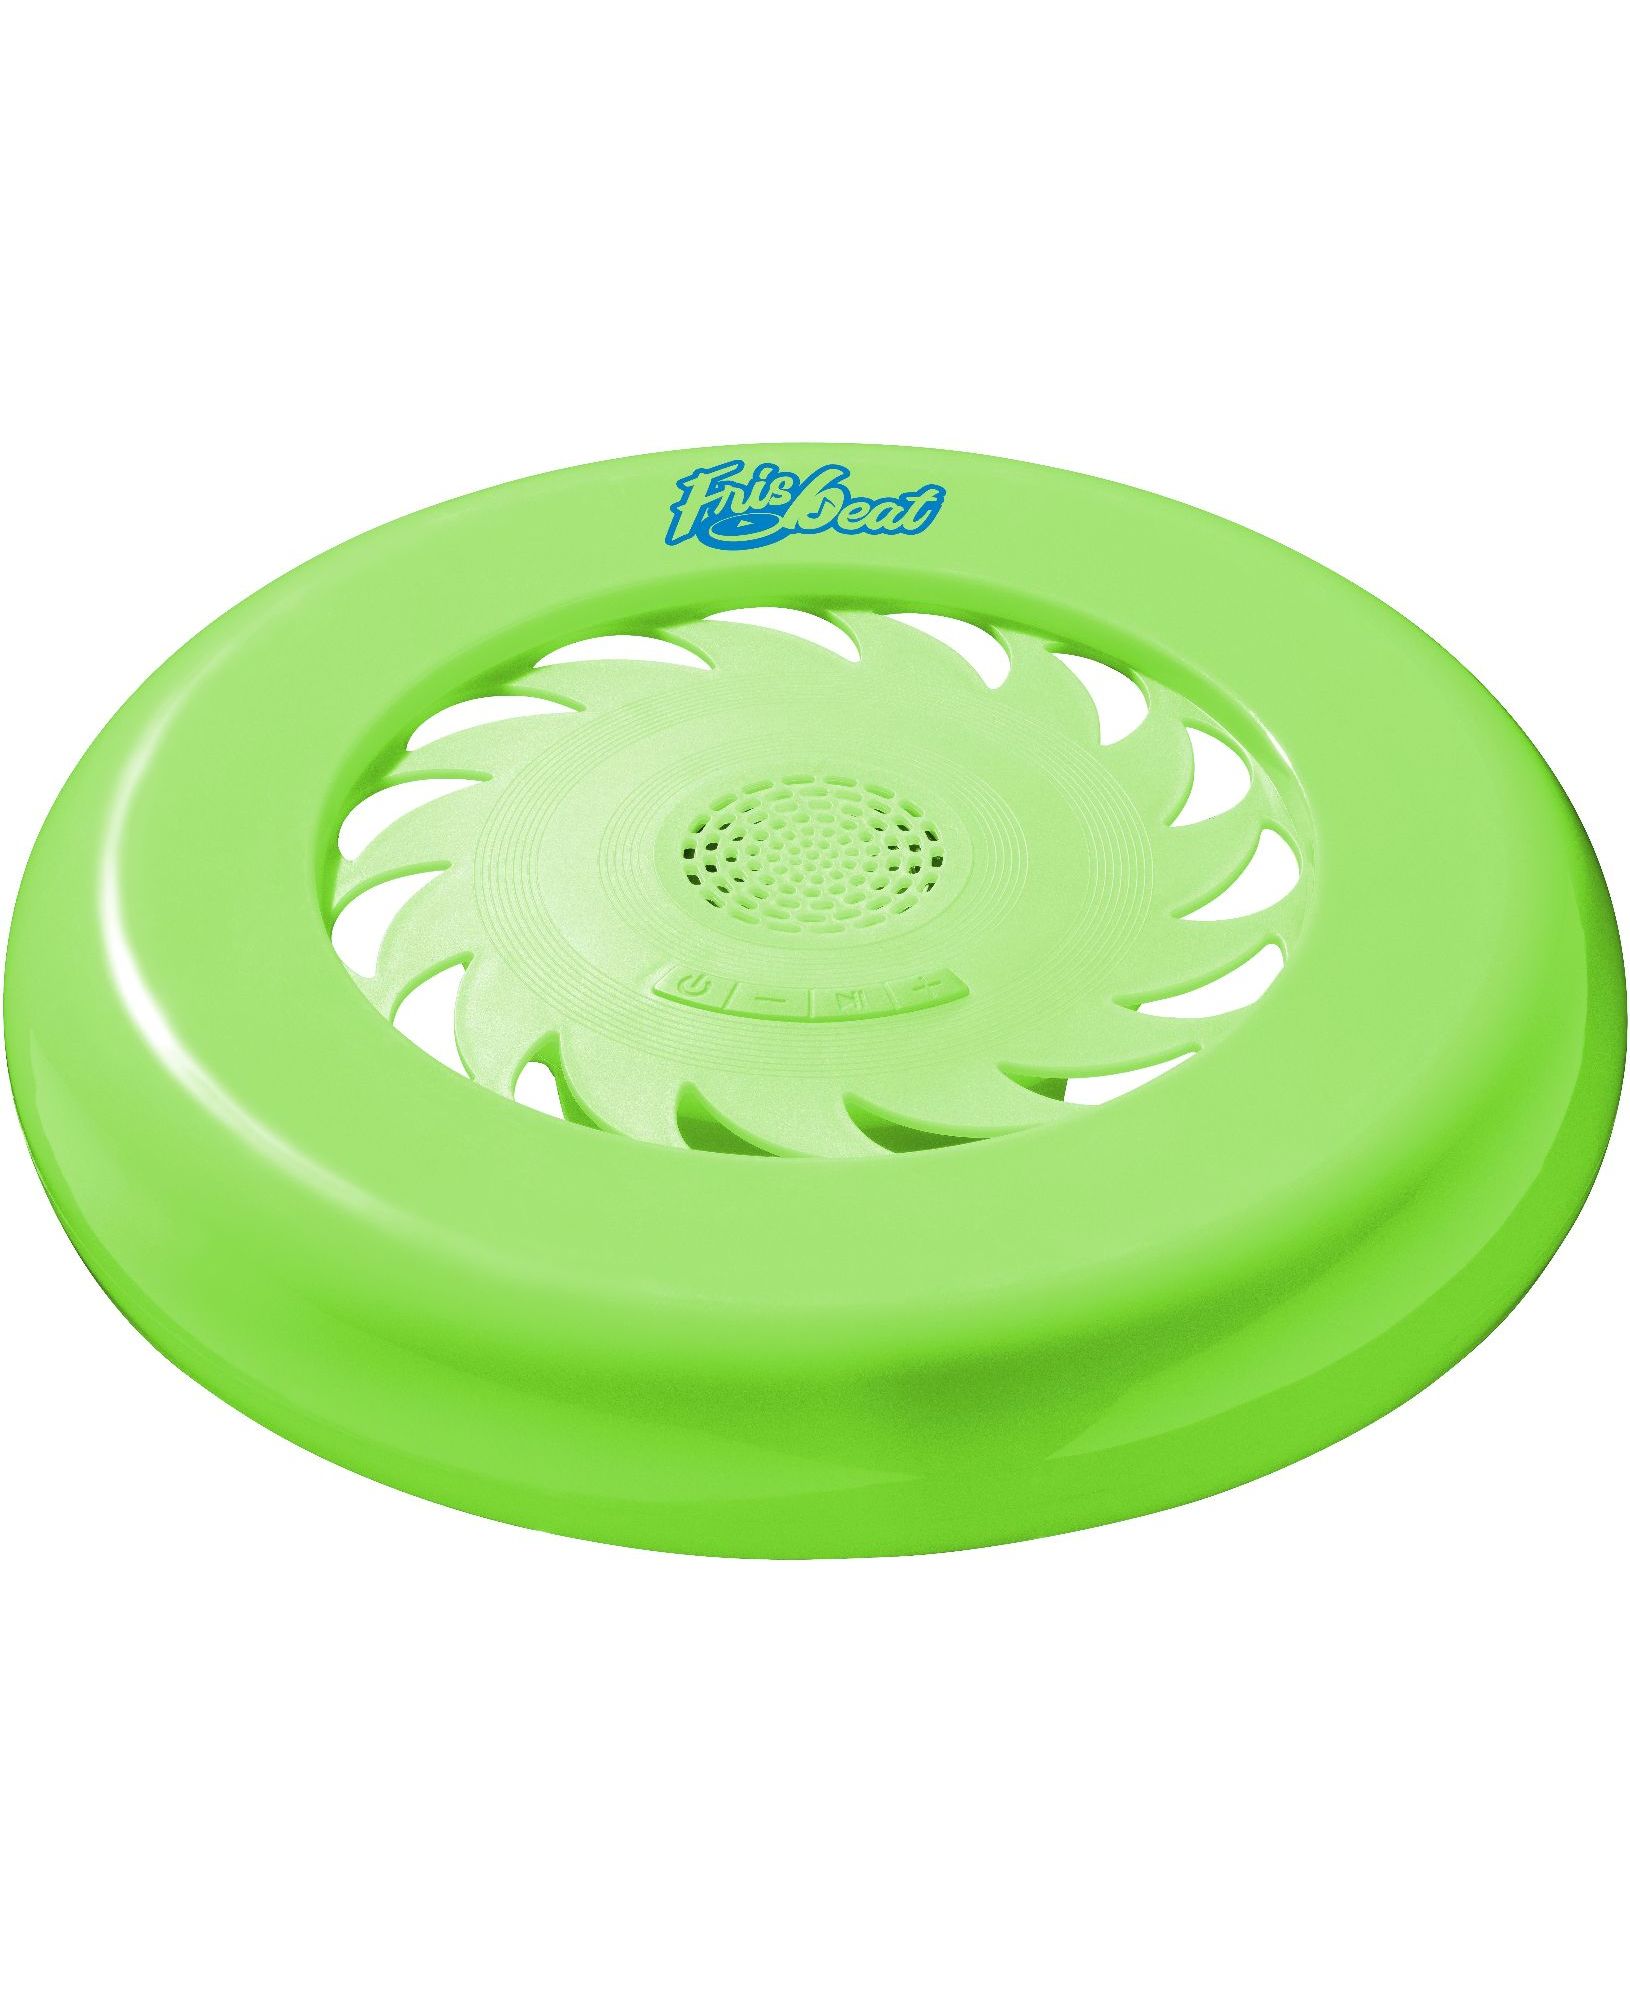 Frisbeat, speaker frisbee BT, green